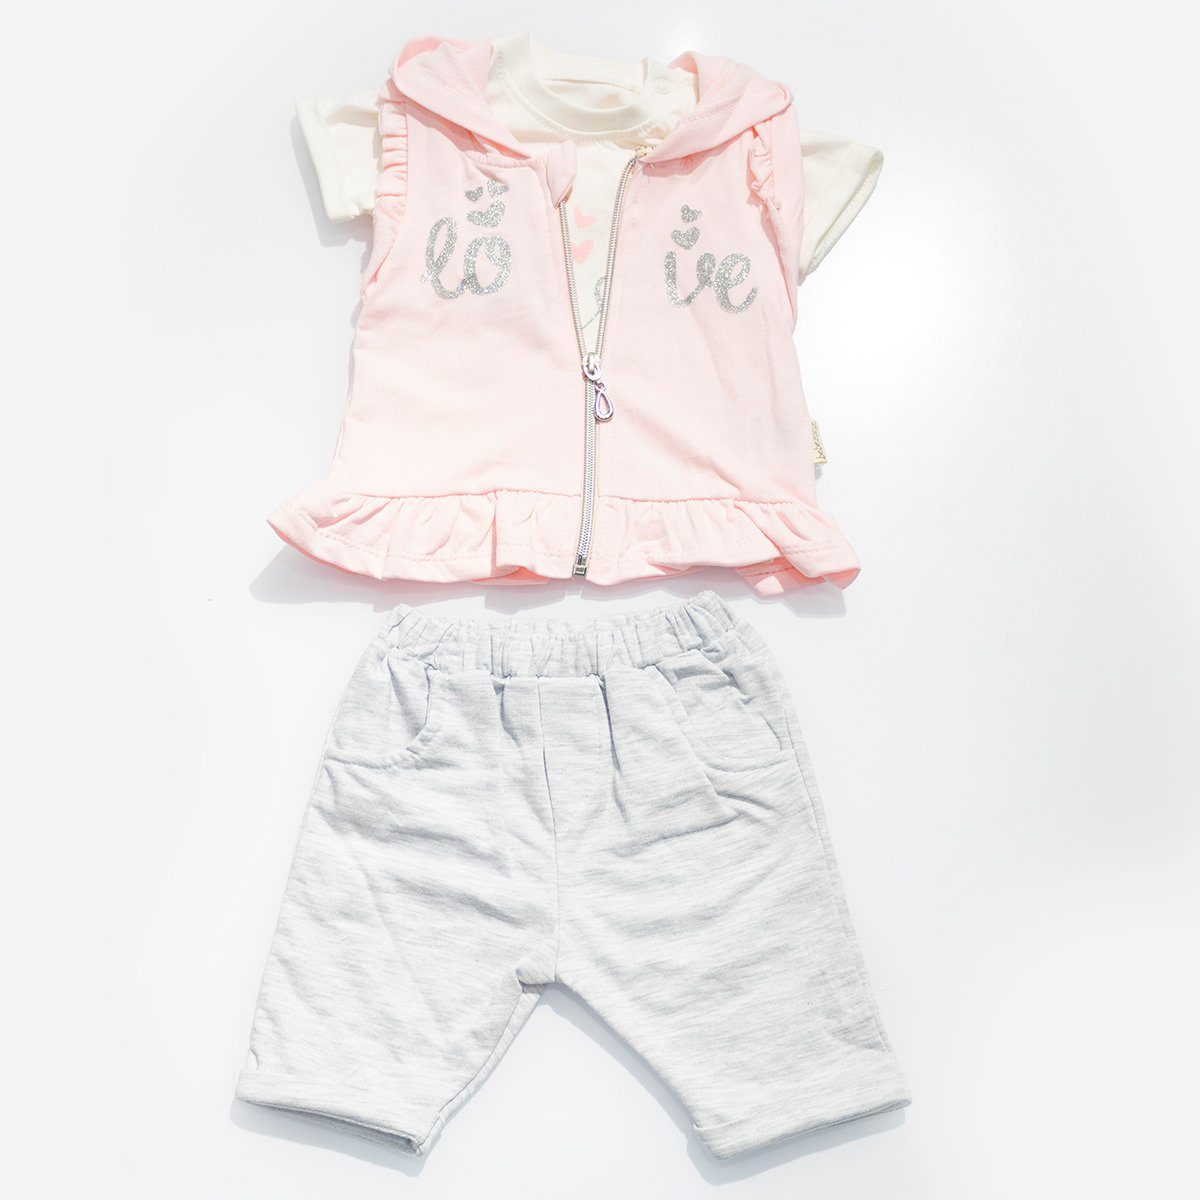 Casual Baby Girl Vest, T-Shirt & Shorts Set - Pink Casual Set BABY ZADA 